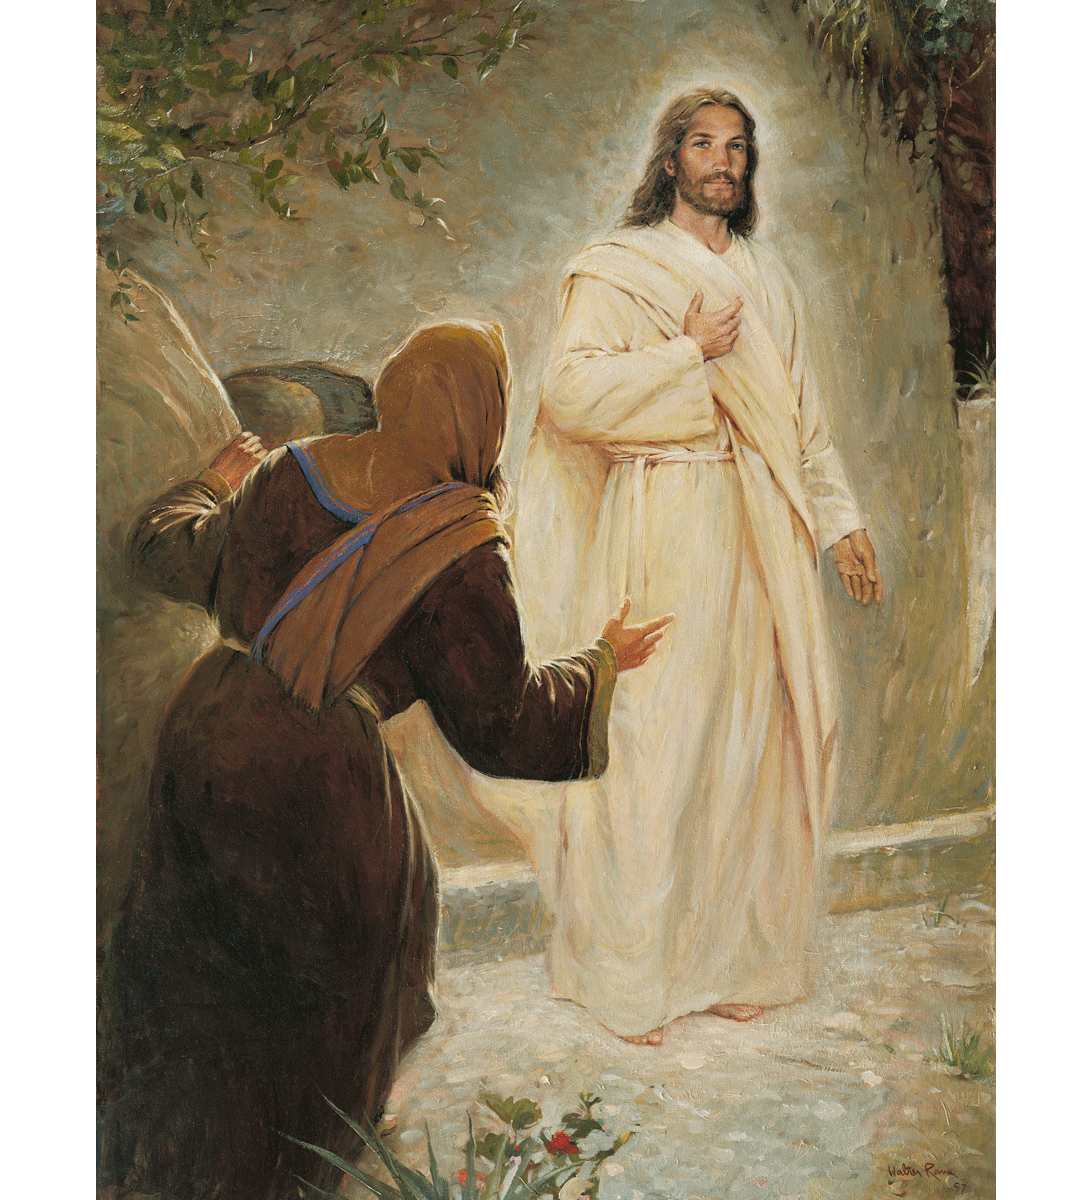 The Resurrected Christ